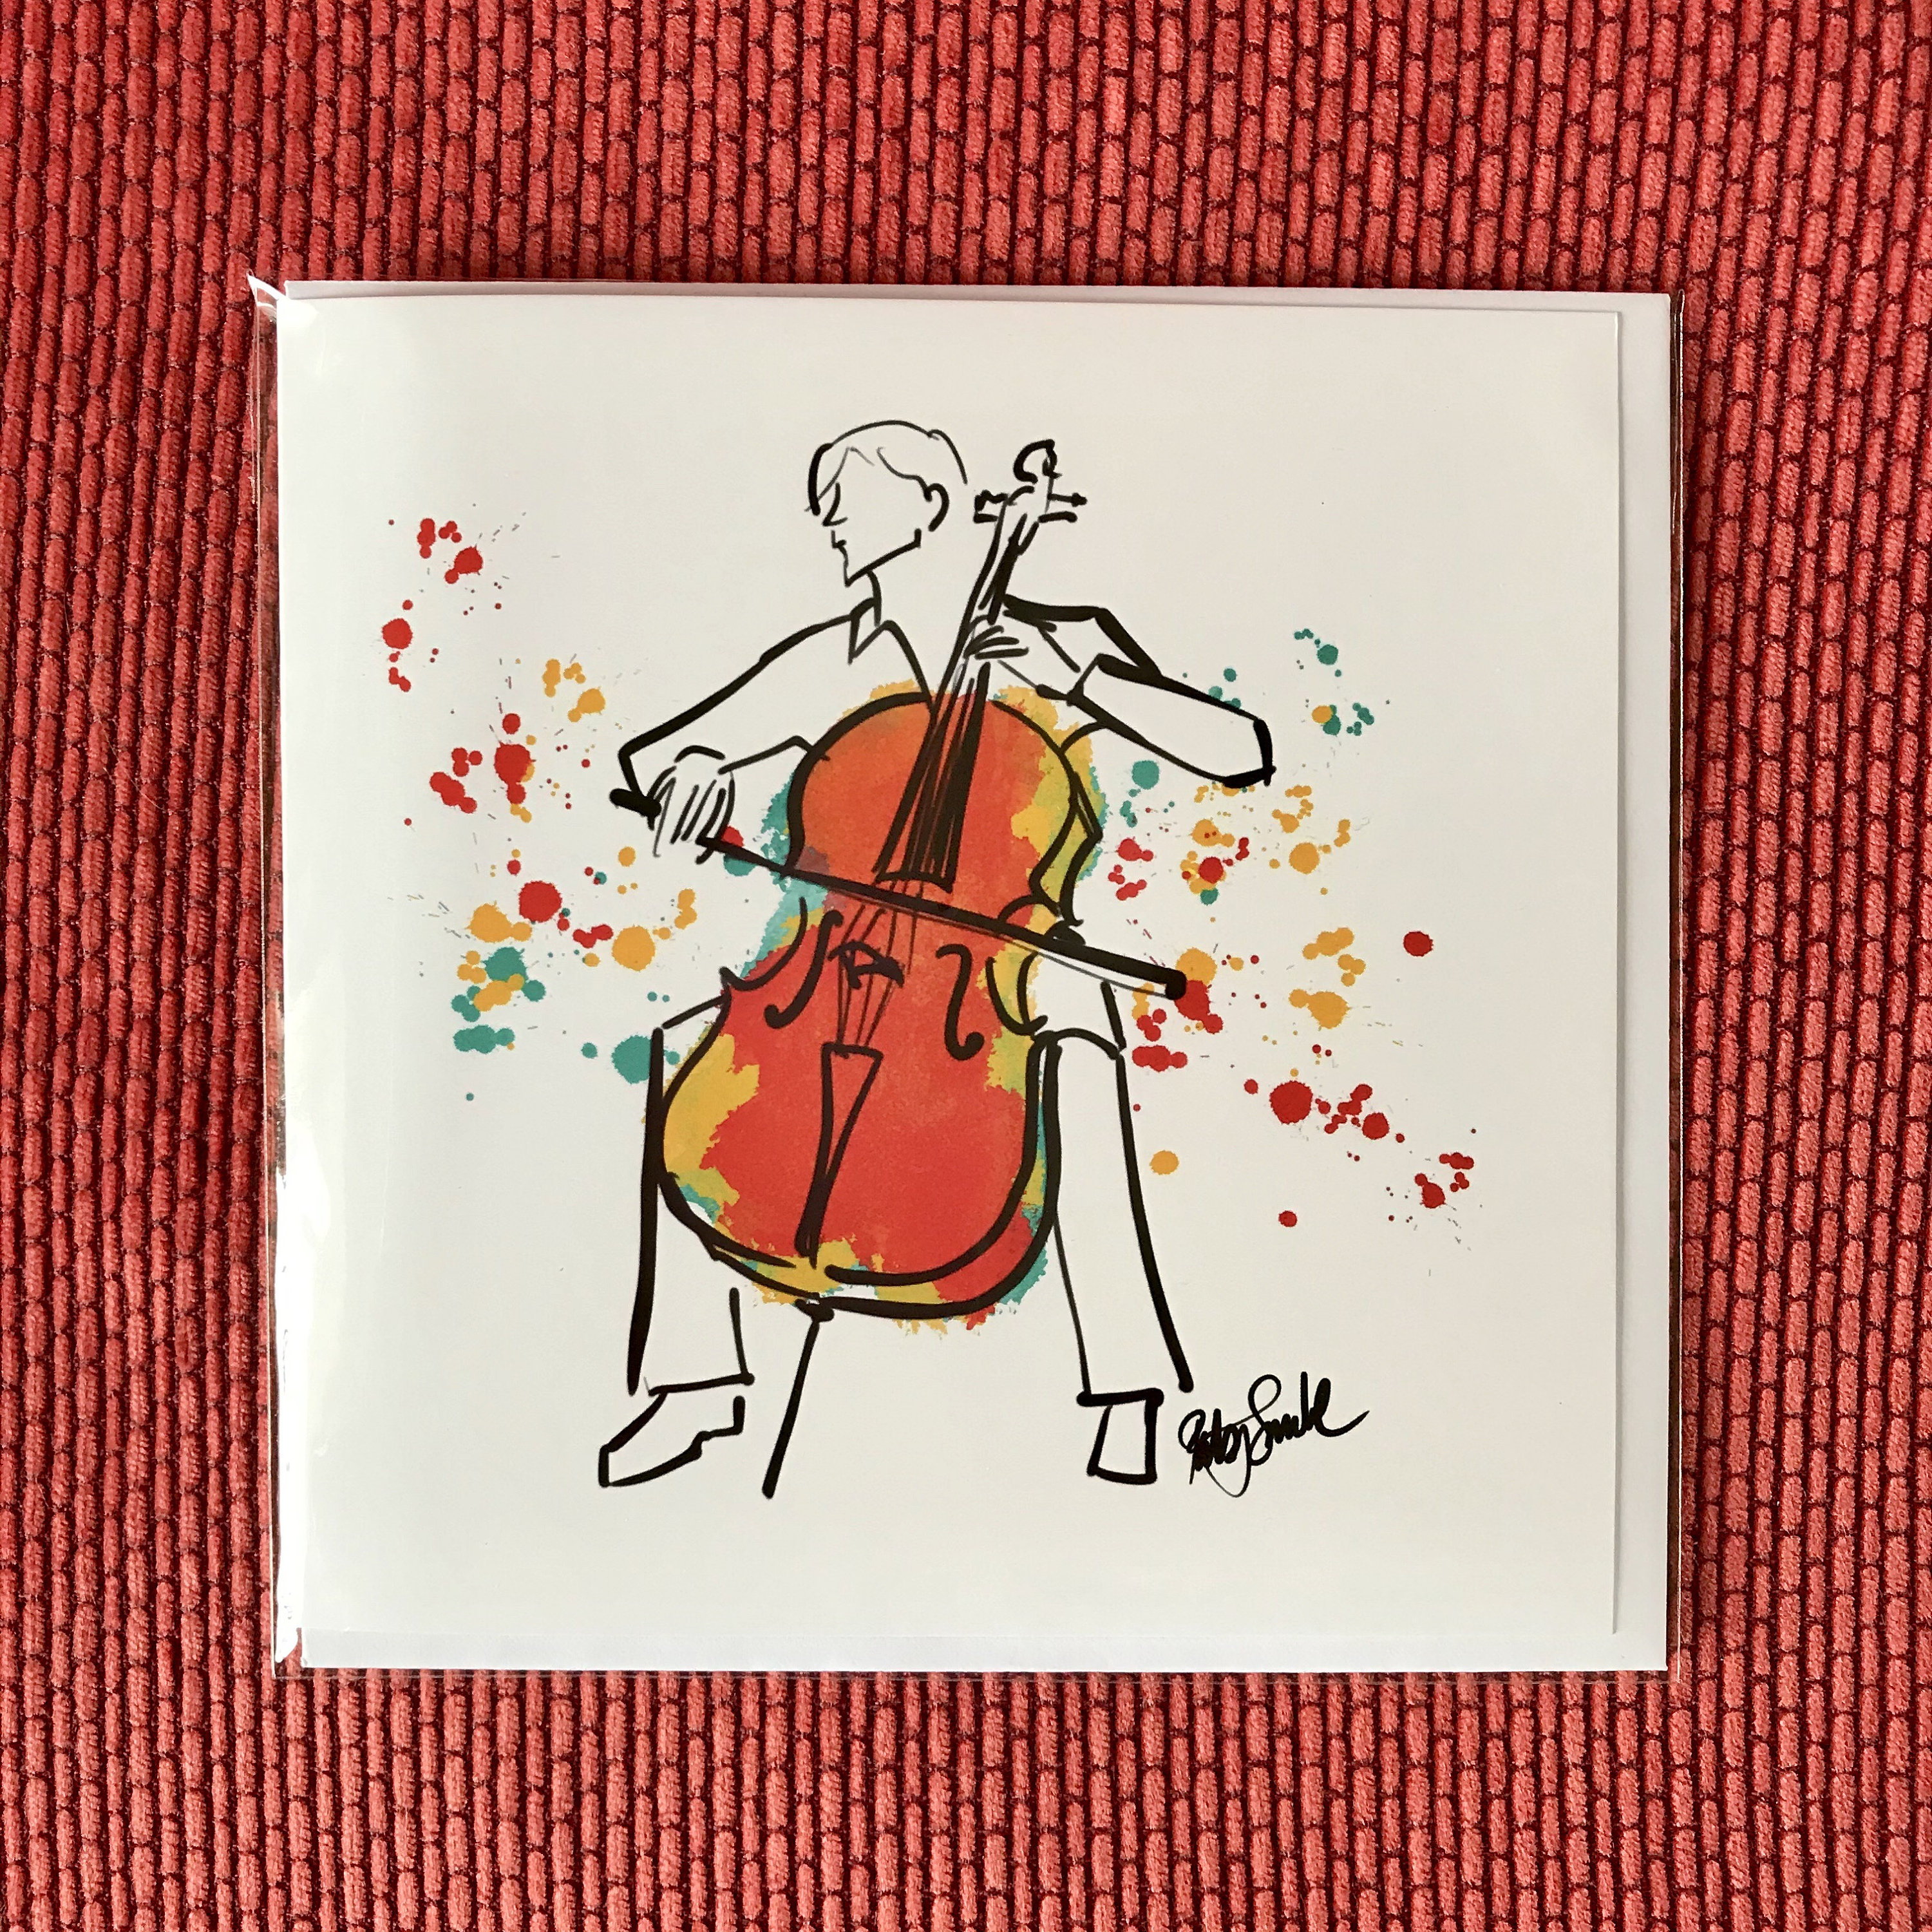 Figurine violoncelliste homme - Cadeau violoncelliste !